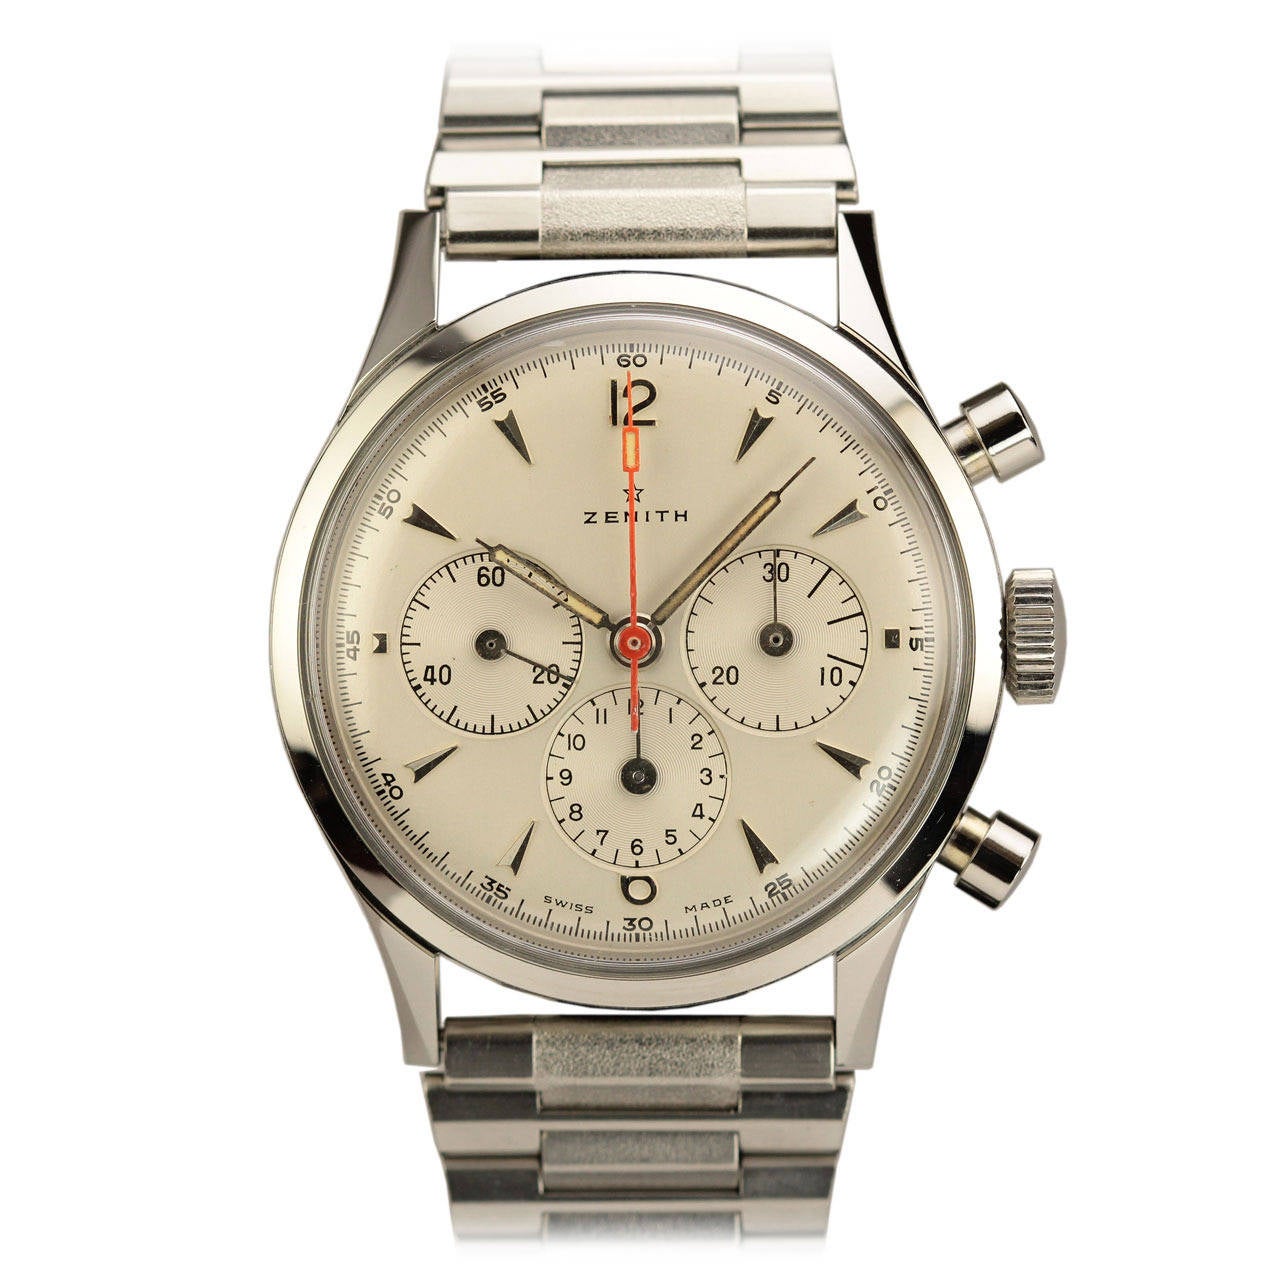 Zenith Stainless Steel Chronograph Wristwatch 